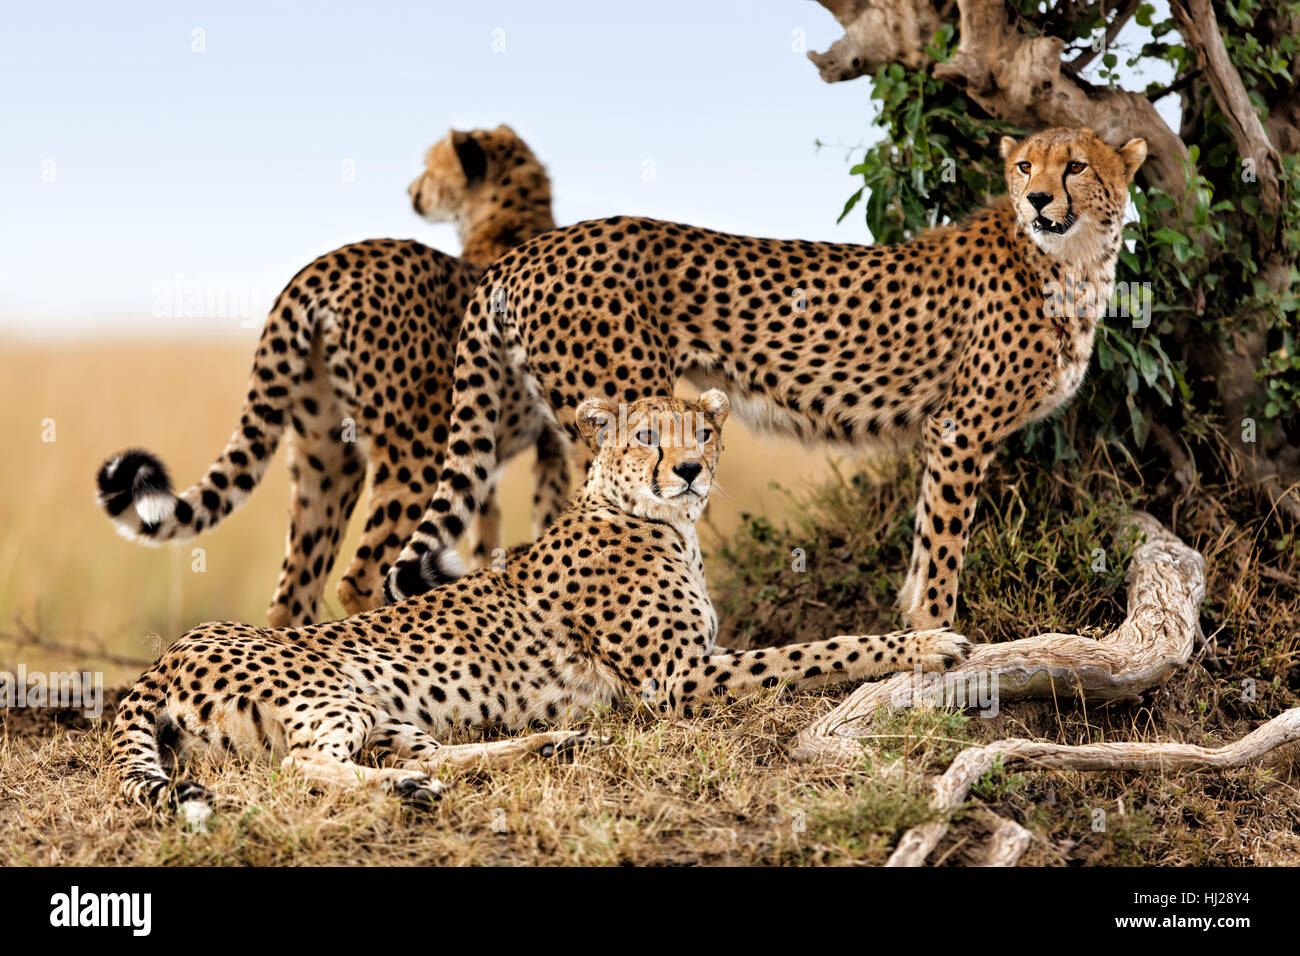 kenya, three, blue, africa, savannah, big cat, feline predator, bush, safari, Stock Photo